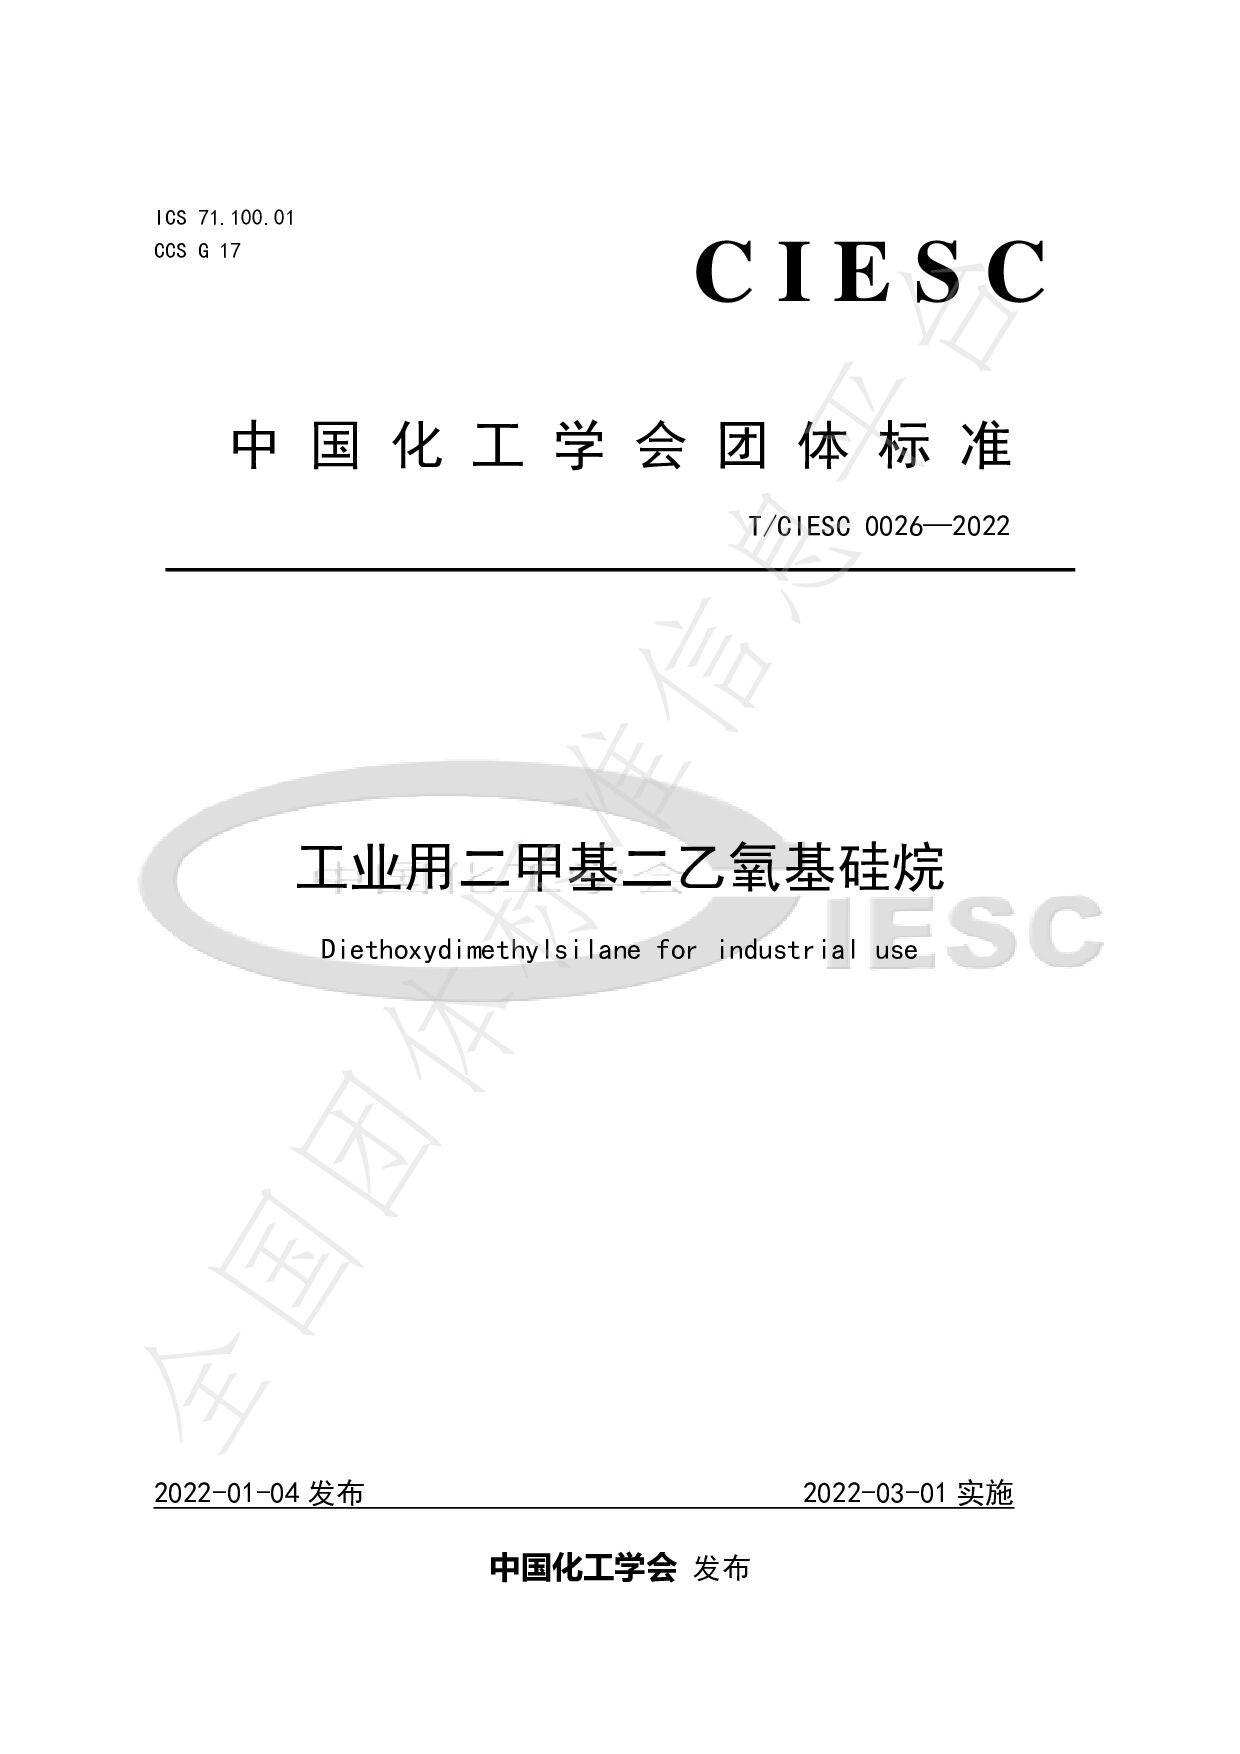 T/CIESC 0026—2022